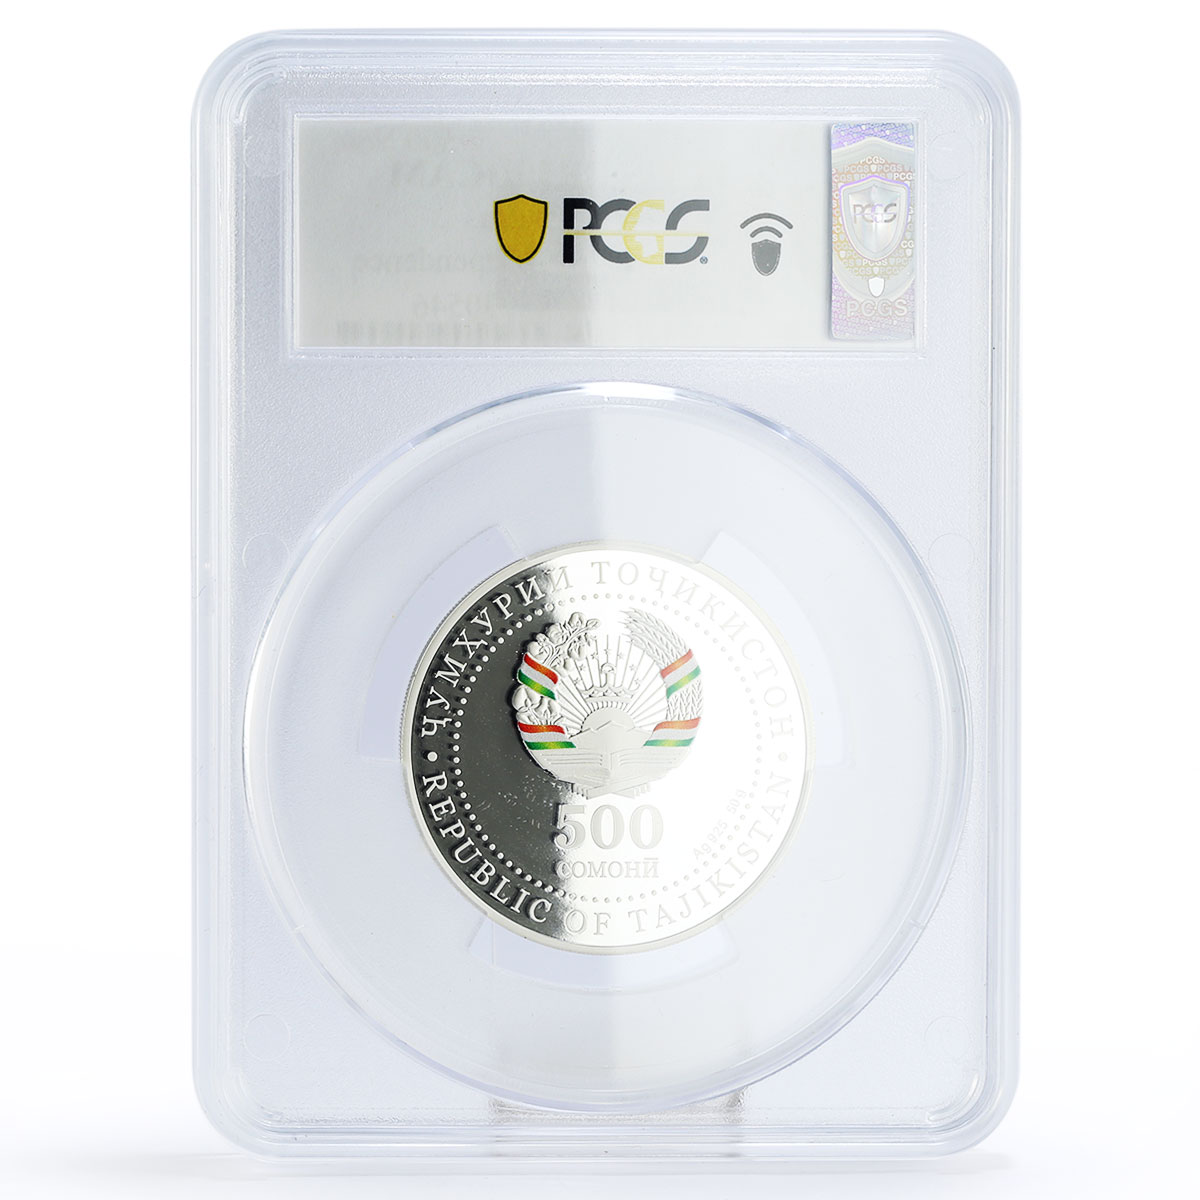 Tajikistan 500 somoni 30th Anniversary of Independece PR70 PCGS silver coin 2021